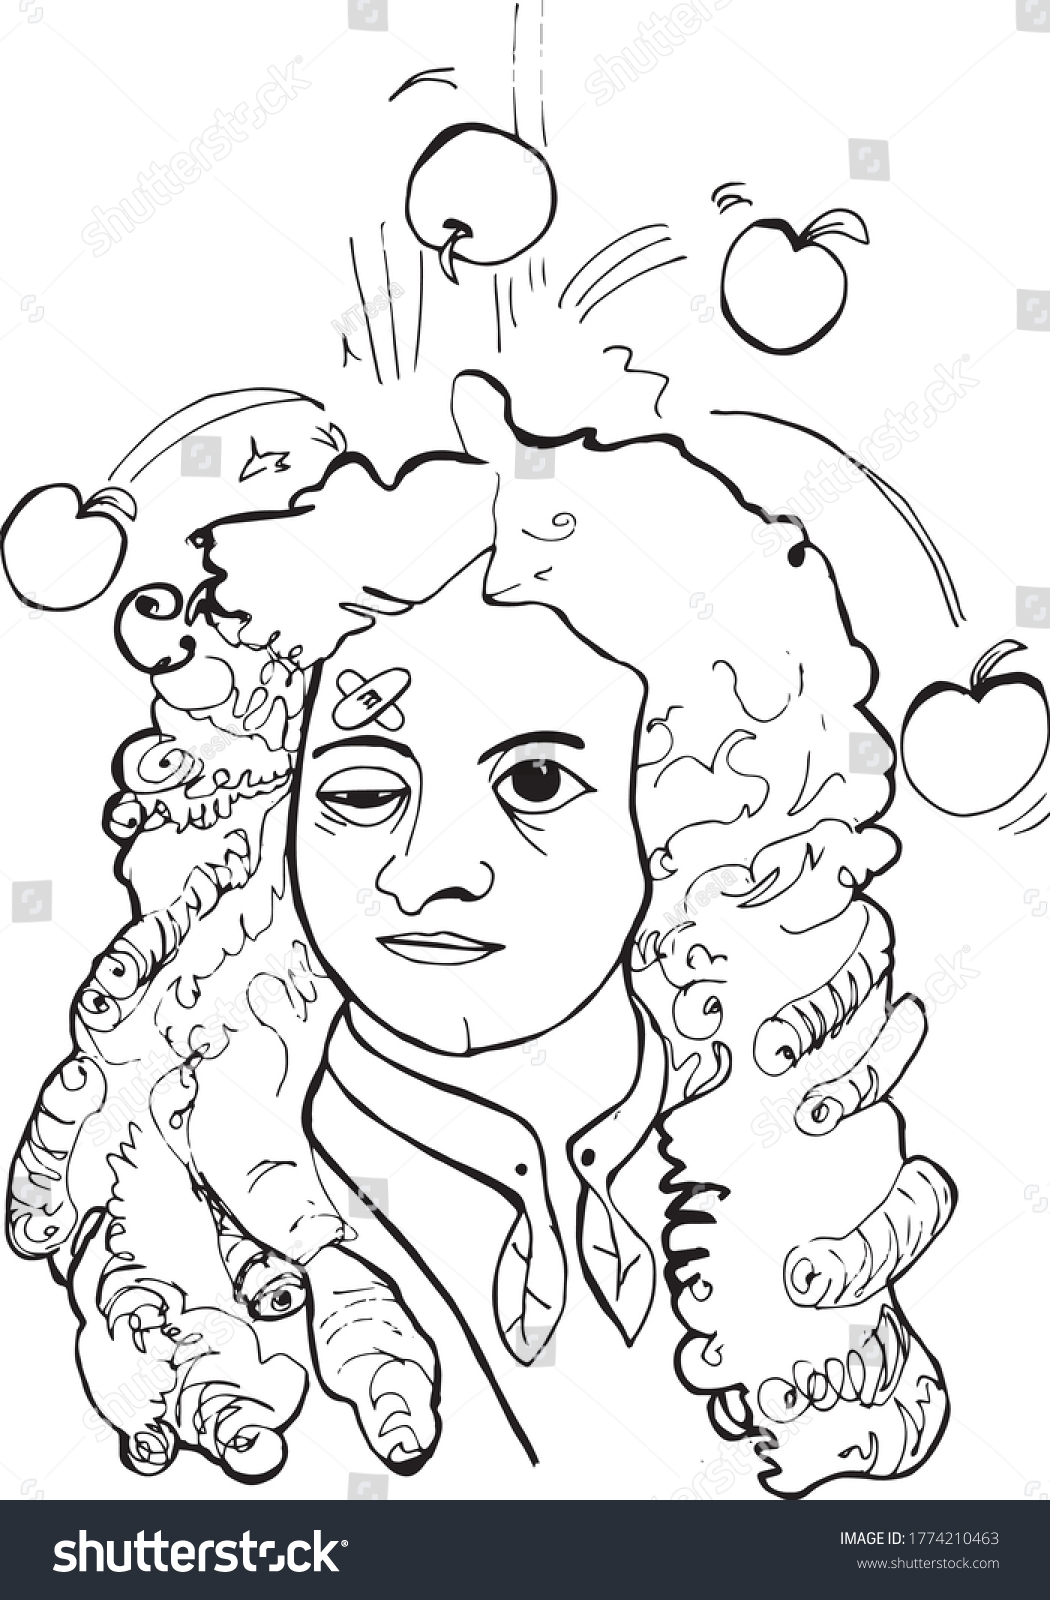 Isaac Newton Vector Caricature Funny Cartoon Stock Vector Royalty Free 1774210463 Shutterstock 7869